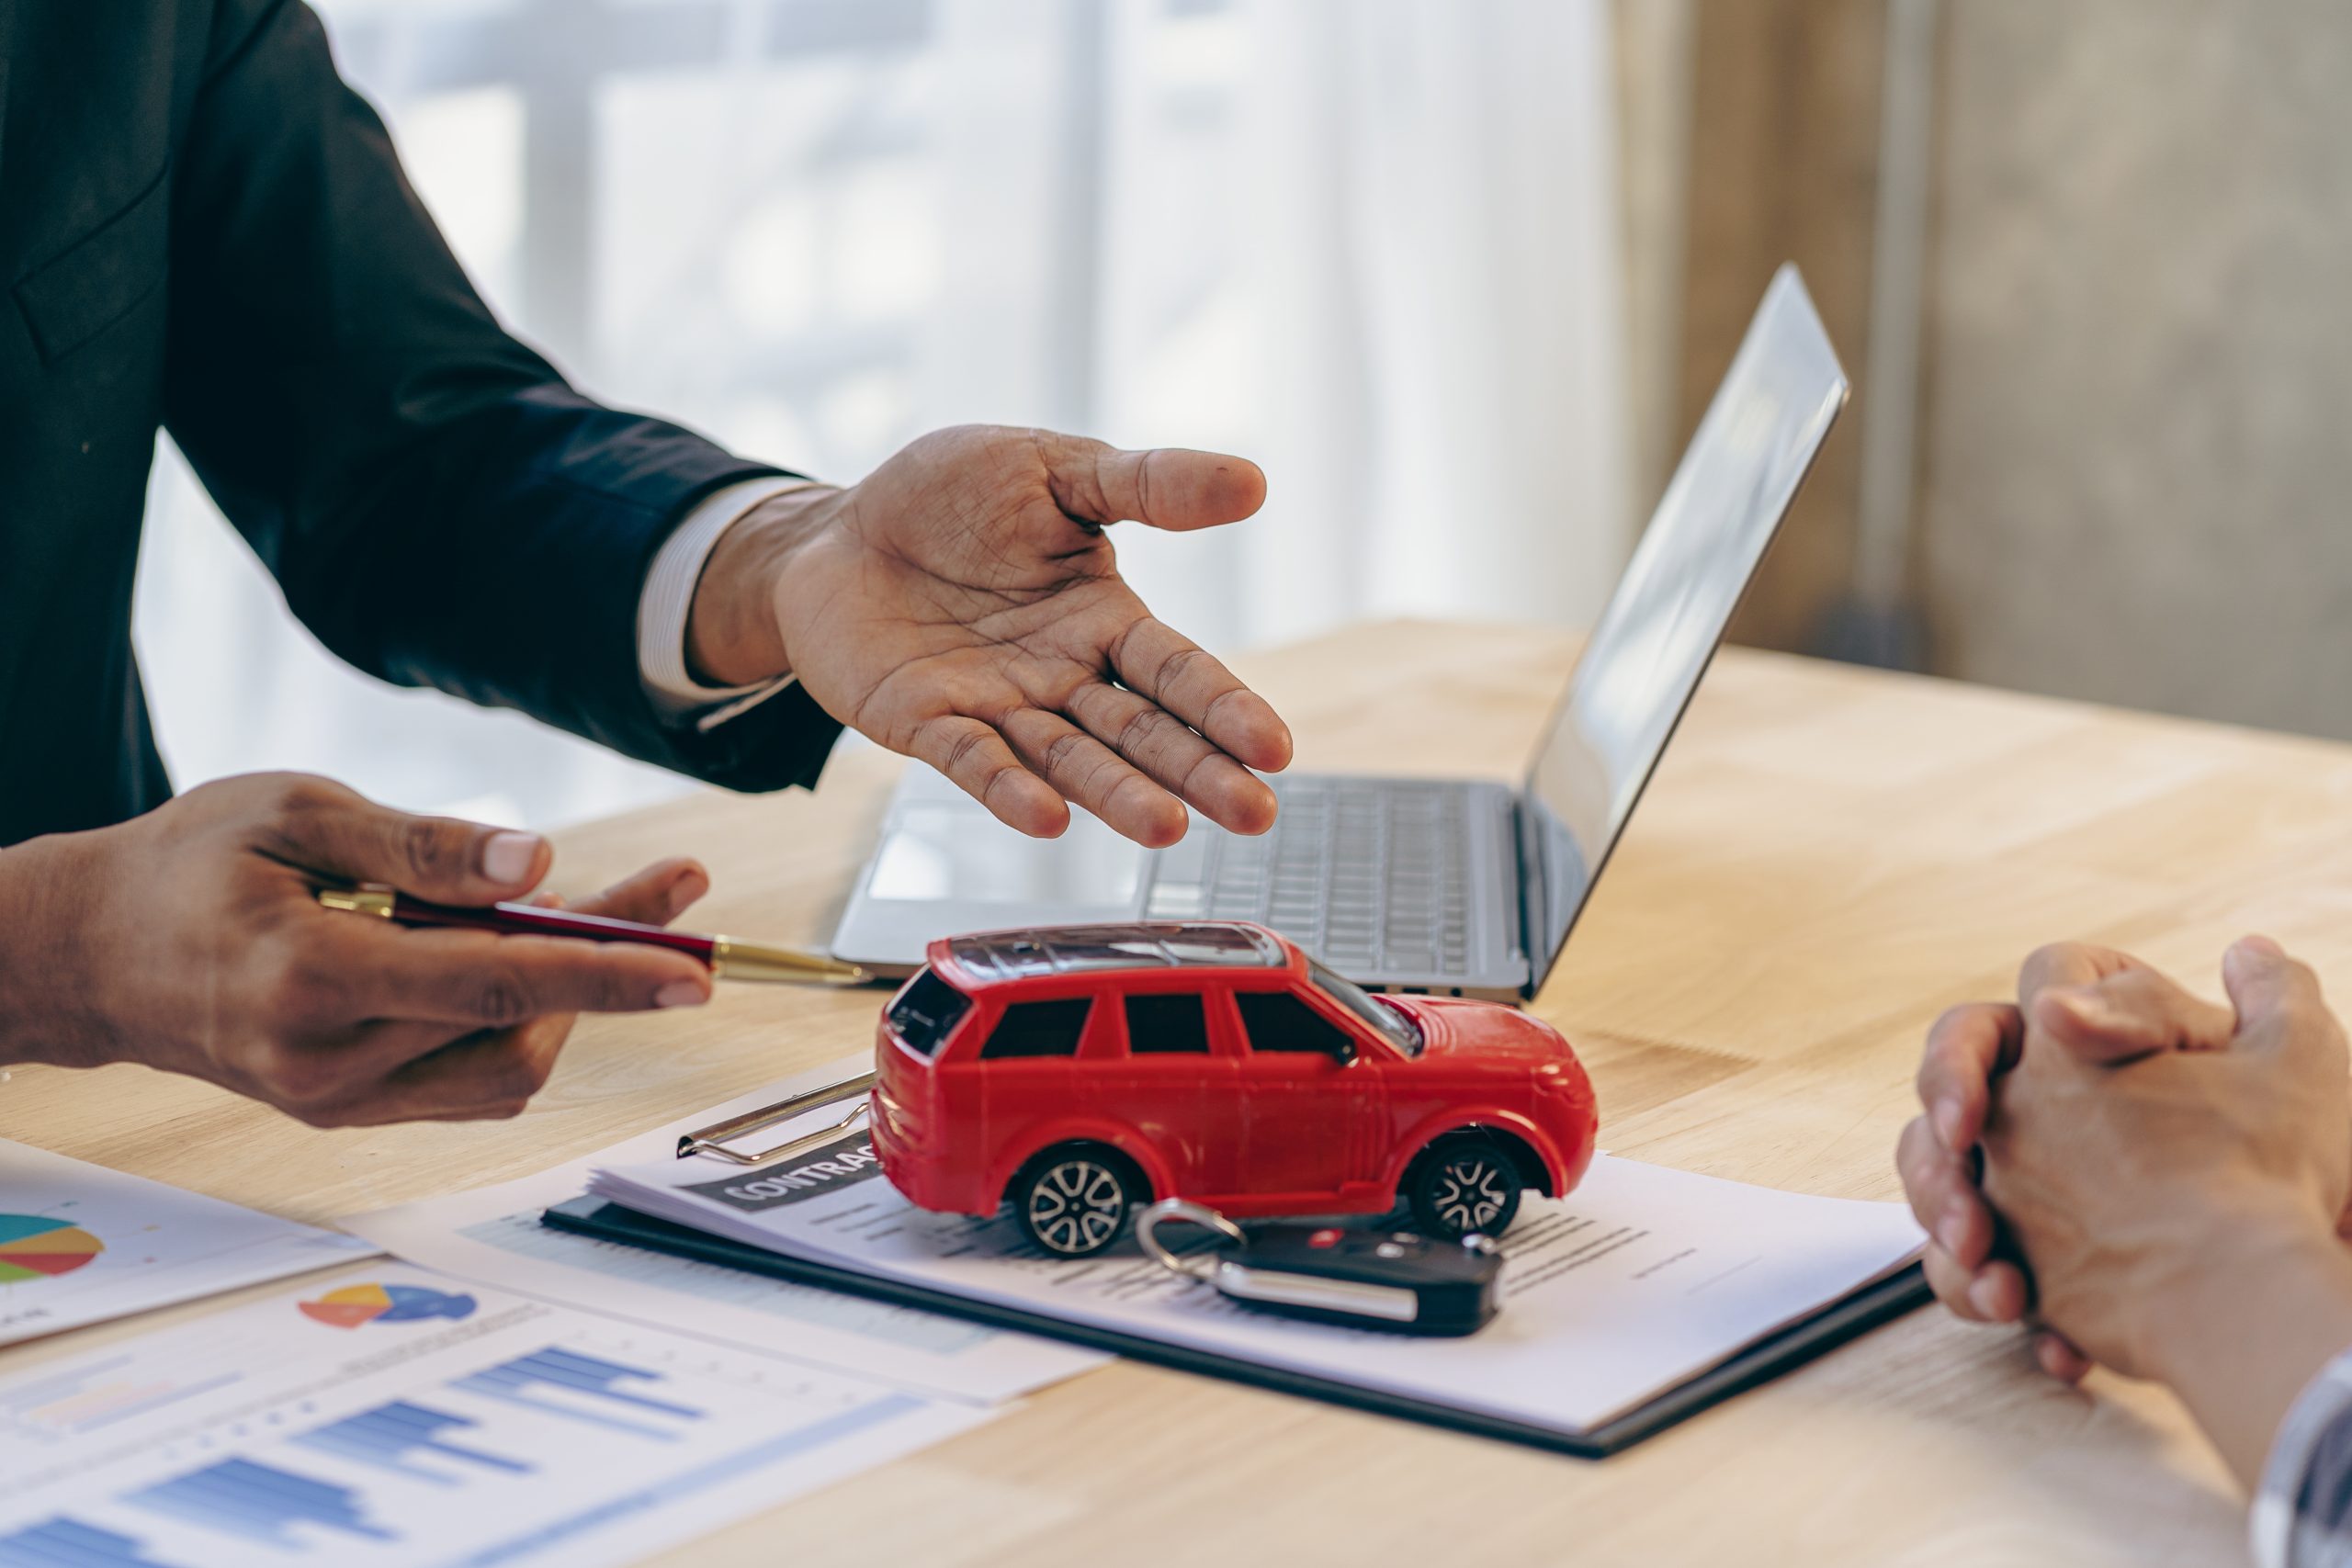 Monthly Car Insurance APR Risks Revealed